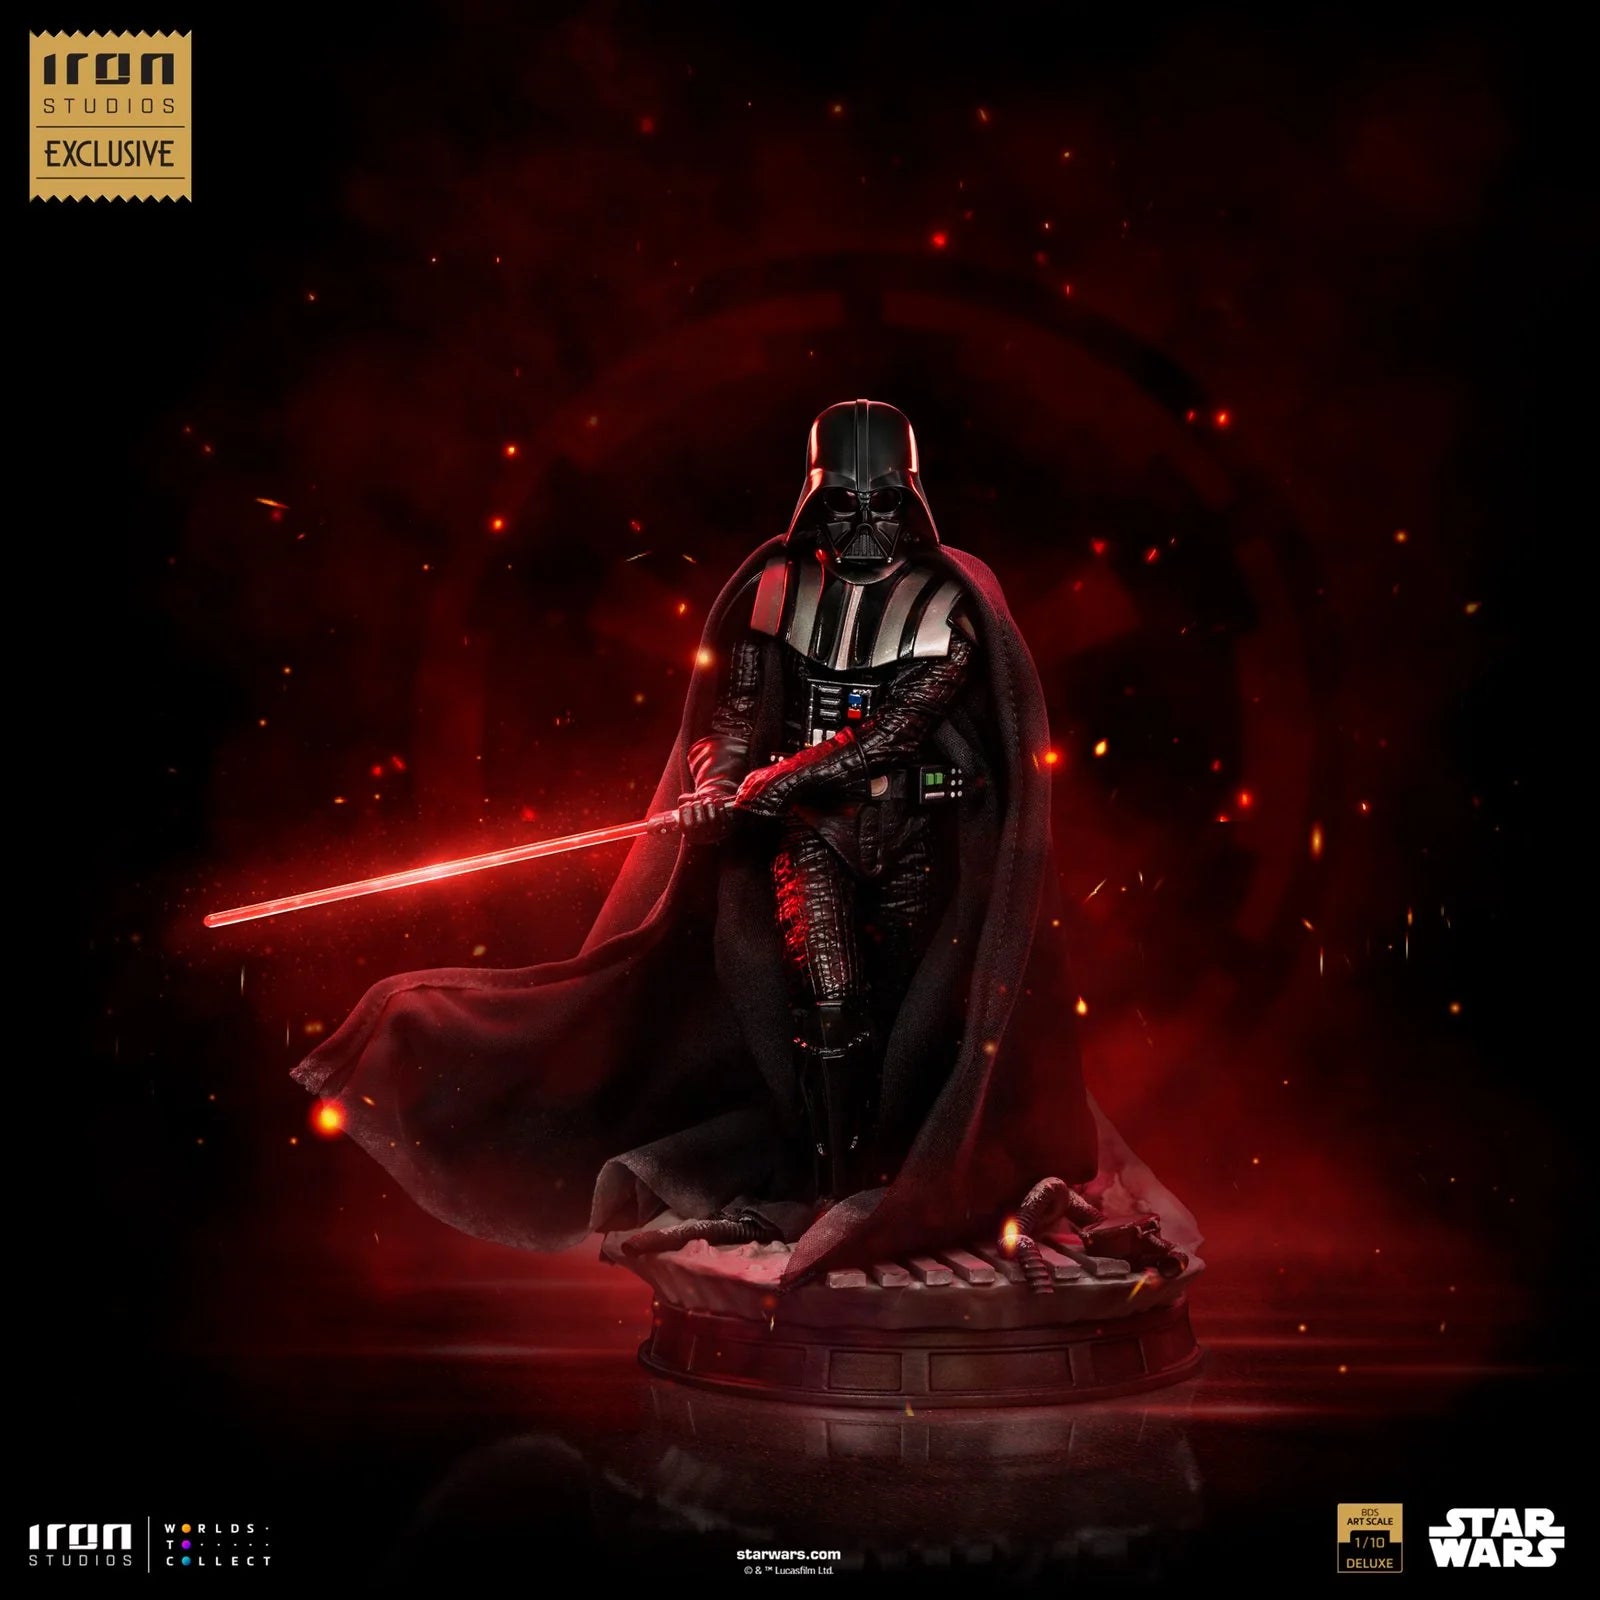 Darth Vader 1/10 - Star Wars The Empire Strikes Back CCXP